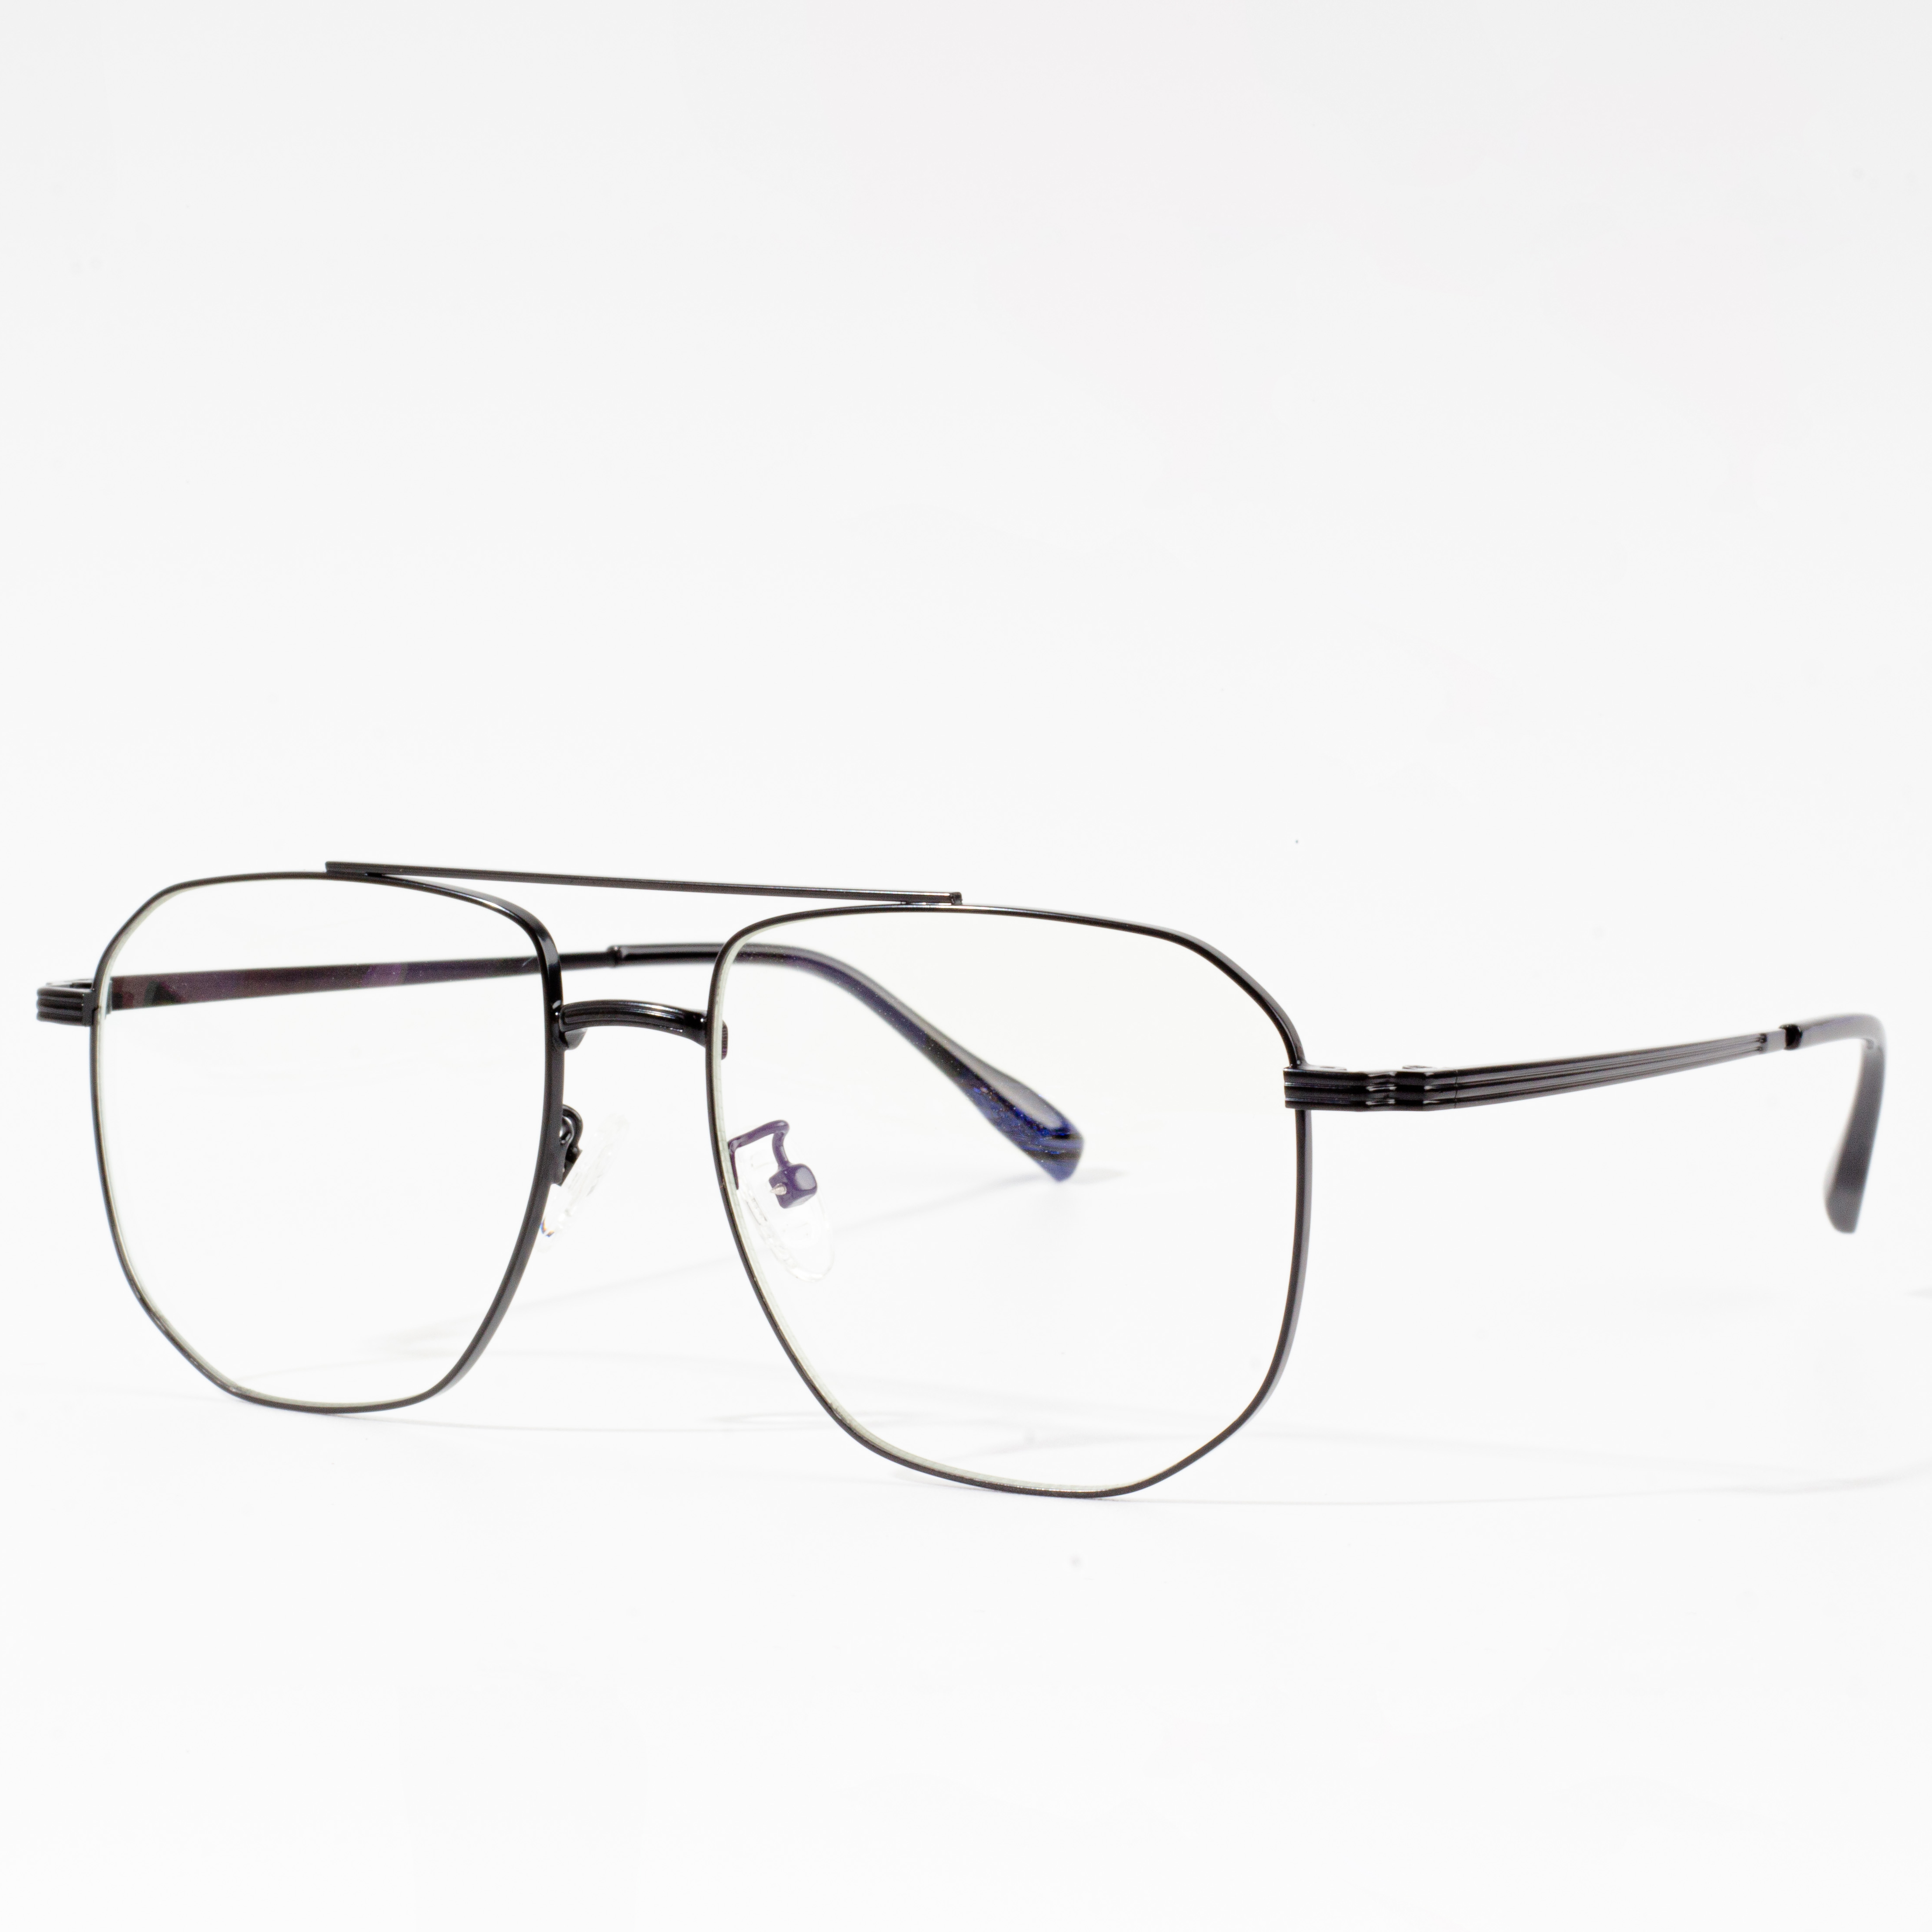 target eyeglass frames